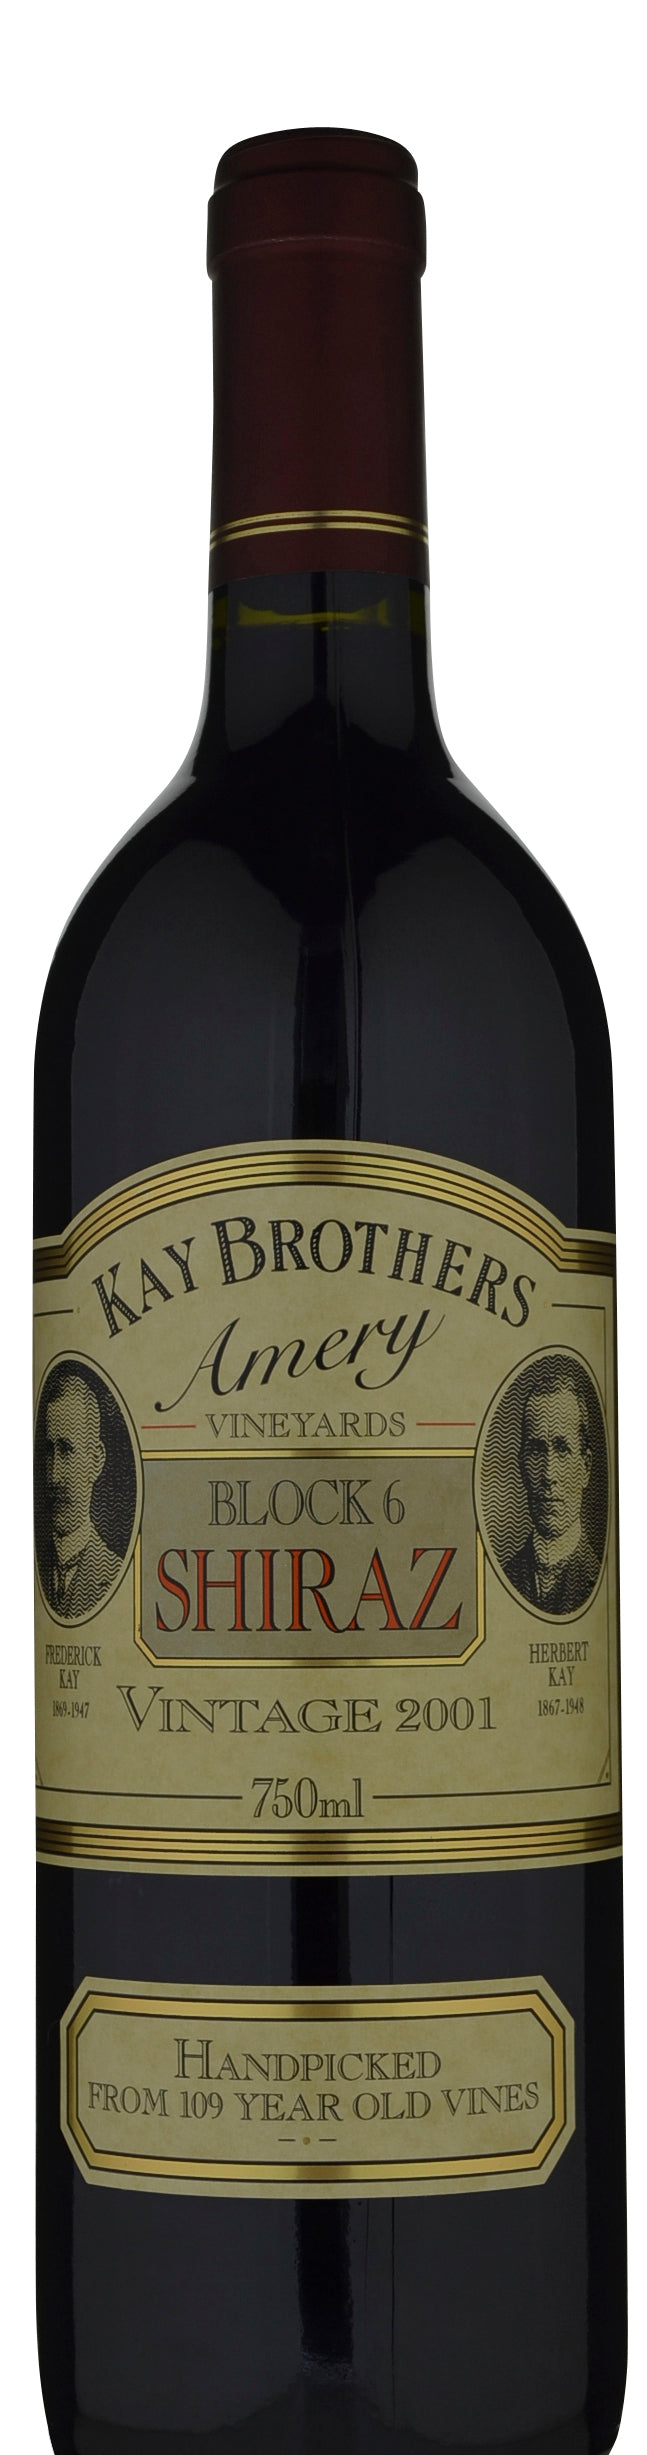 Kay Brothers Amery Vineyards Block 6 Old Vine Shiraz 2001